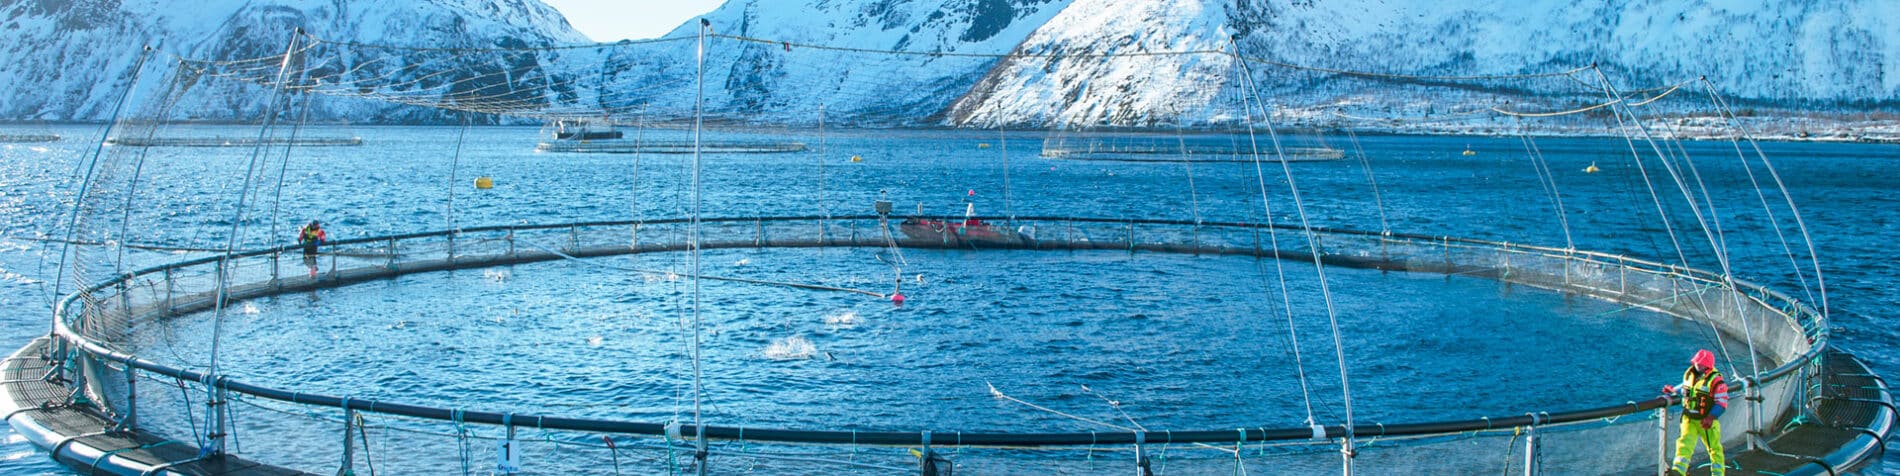 When is a Norwegian Salmon a Norwegian Salmon? When EY Skye’s Blockchain Solution Says So